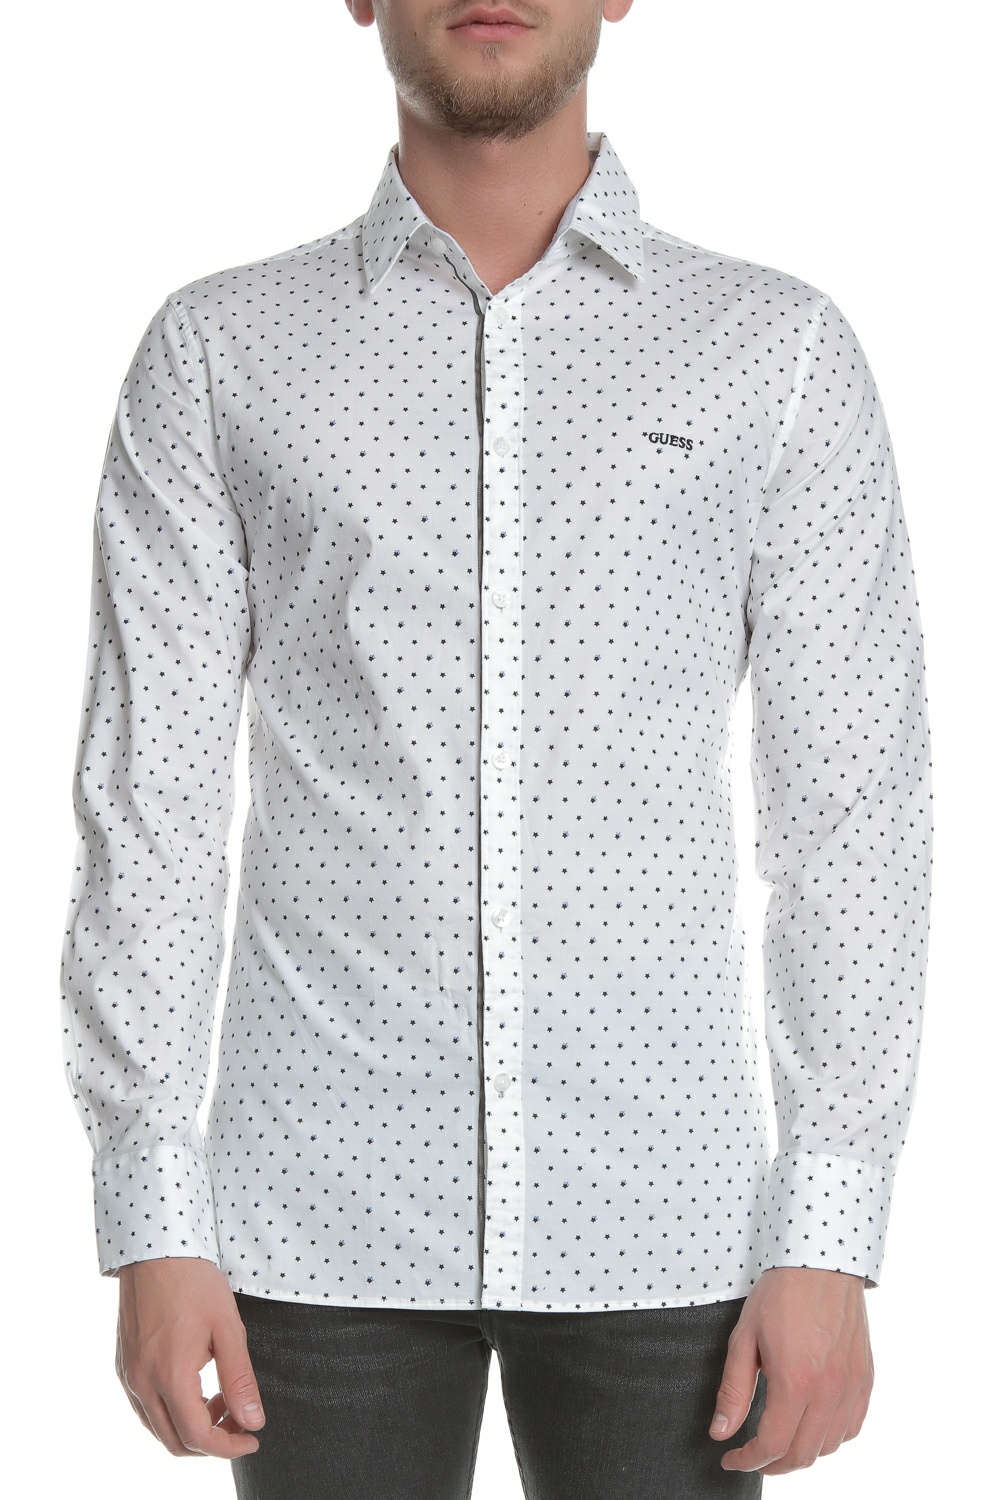 GUESS - Ανδρικό μακρυμάνικο πουκάμισο GUESS λευκό με print